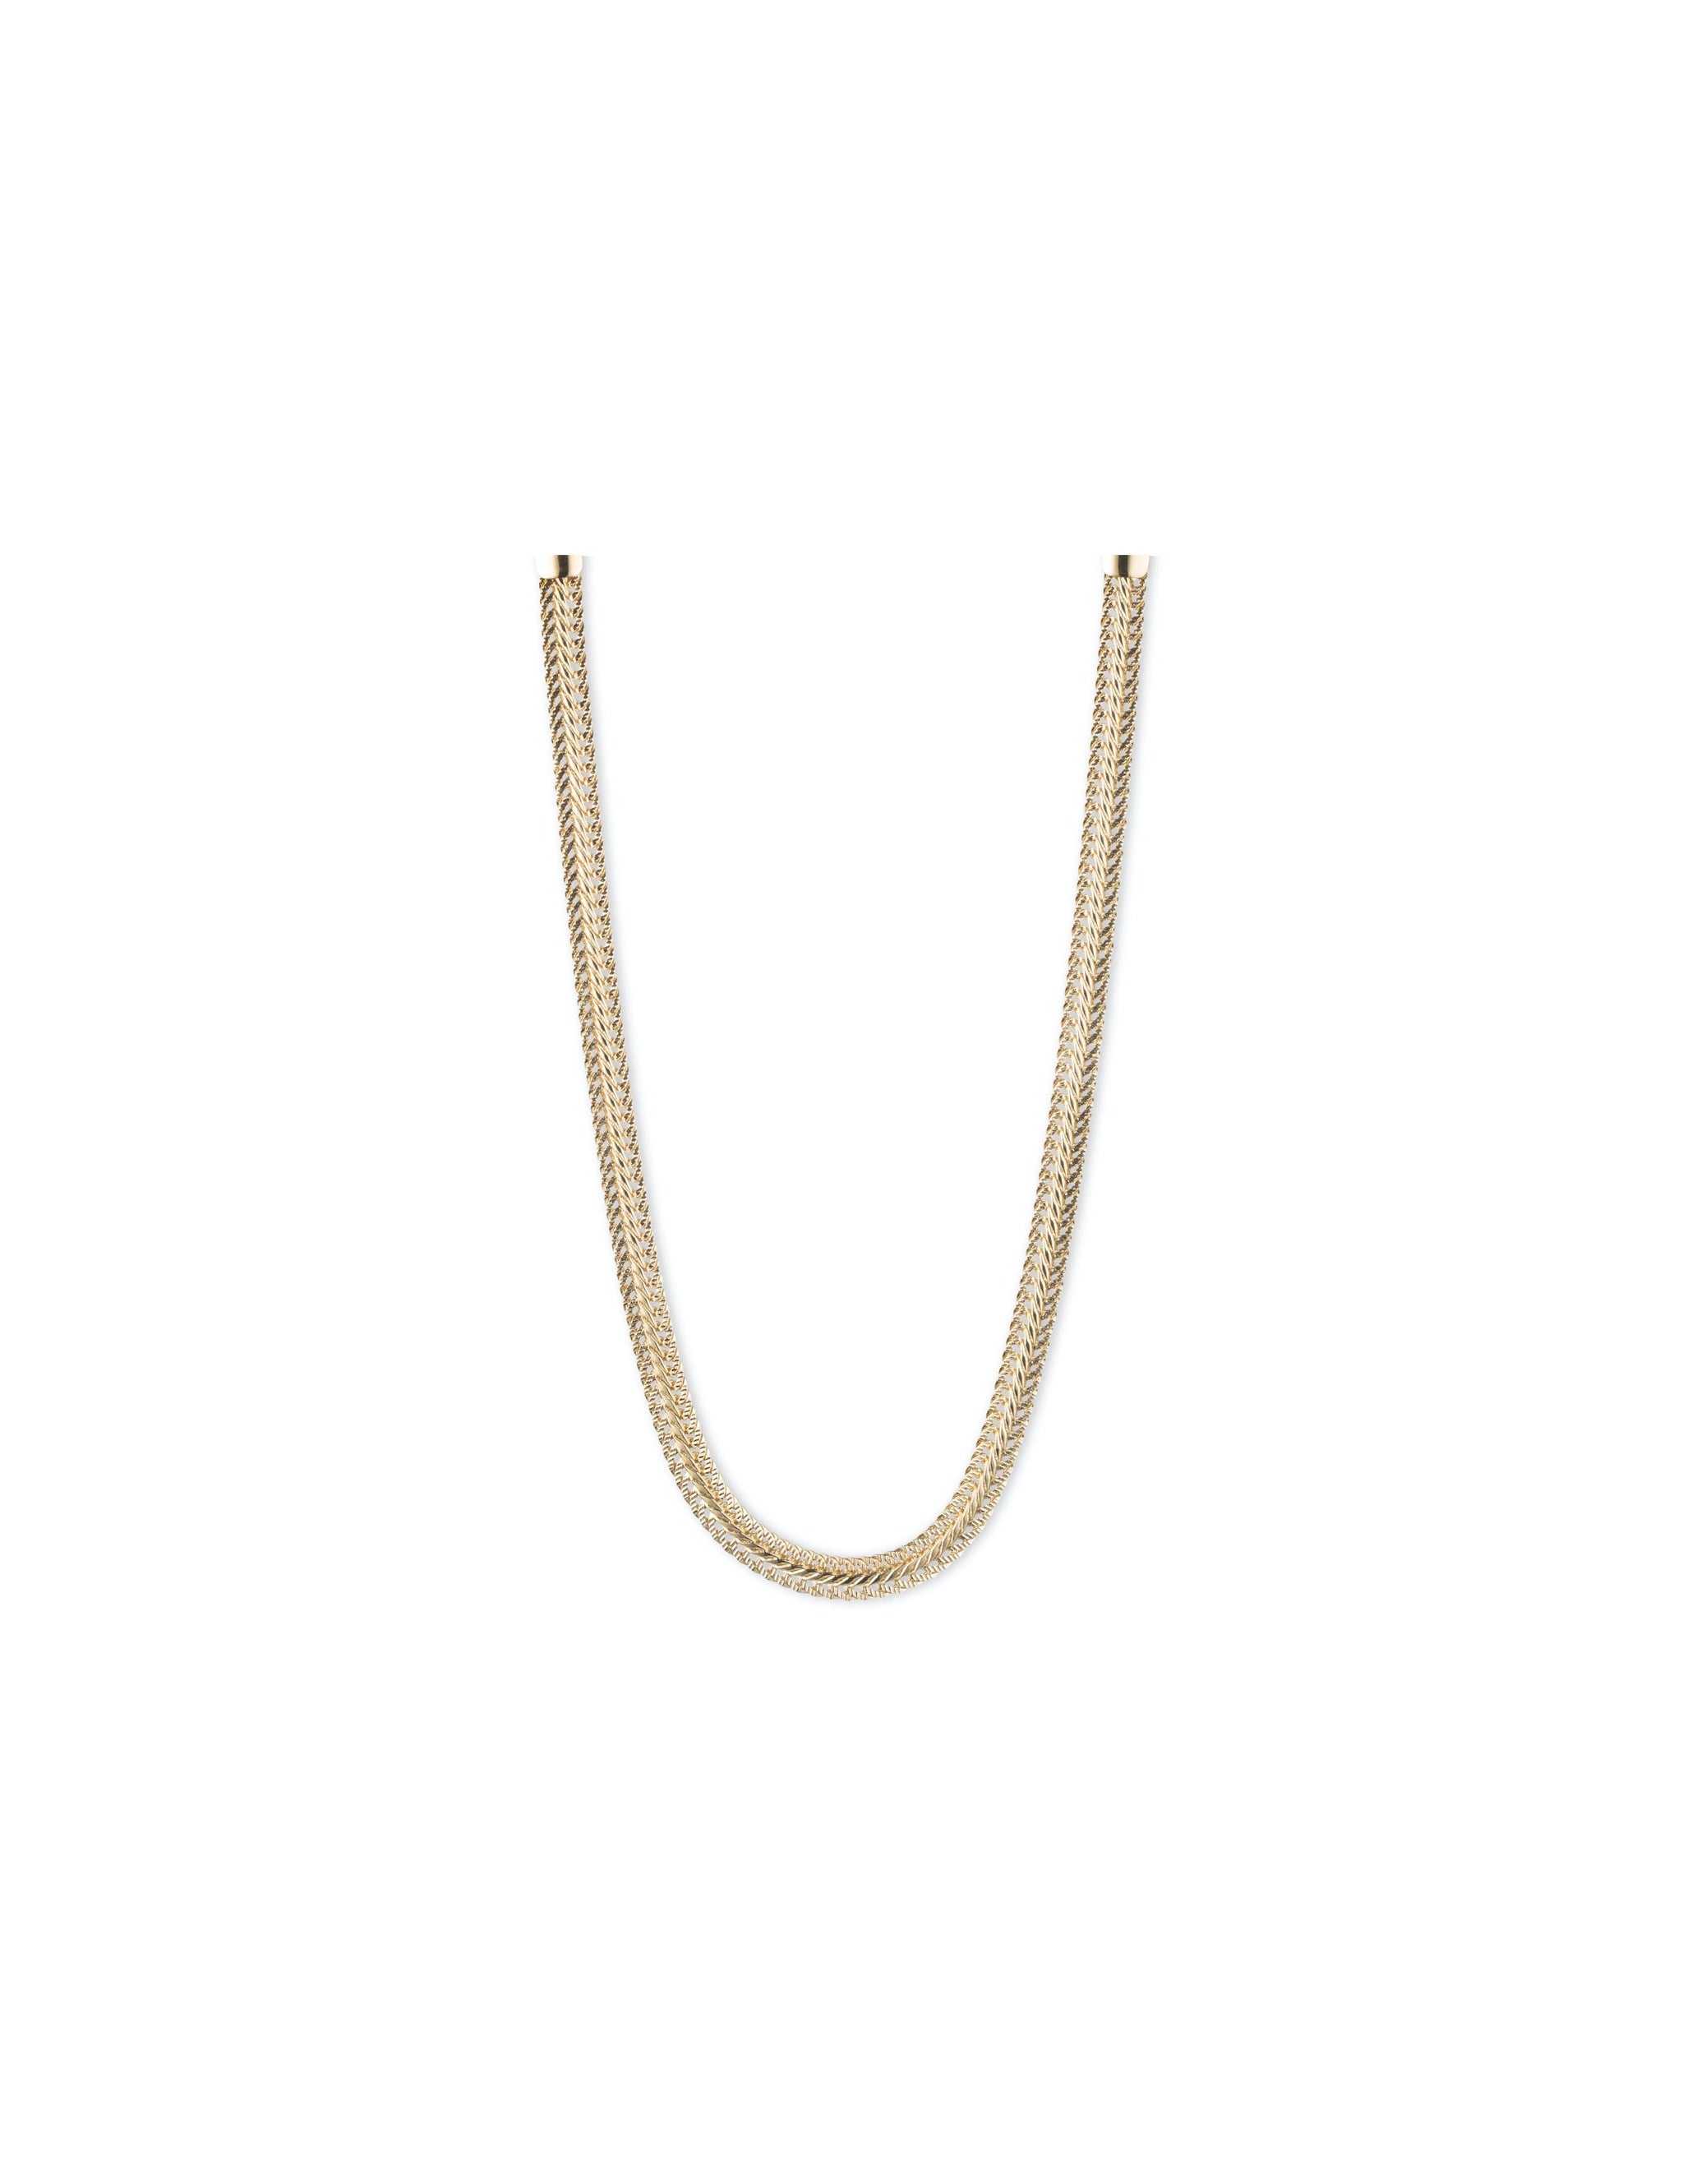 Fancy Herringbone Gold Chain Necklace